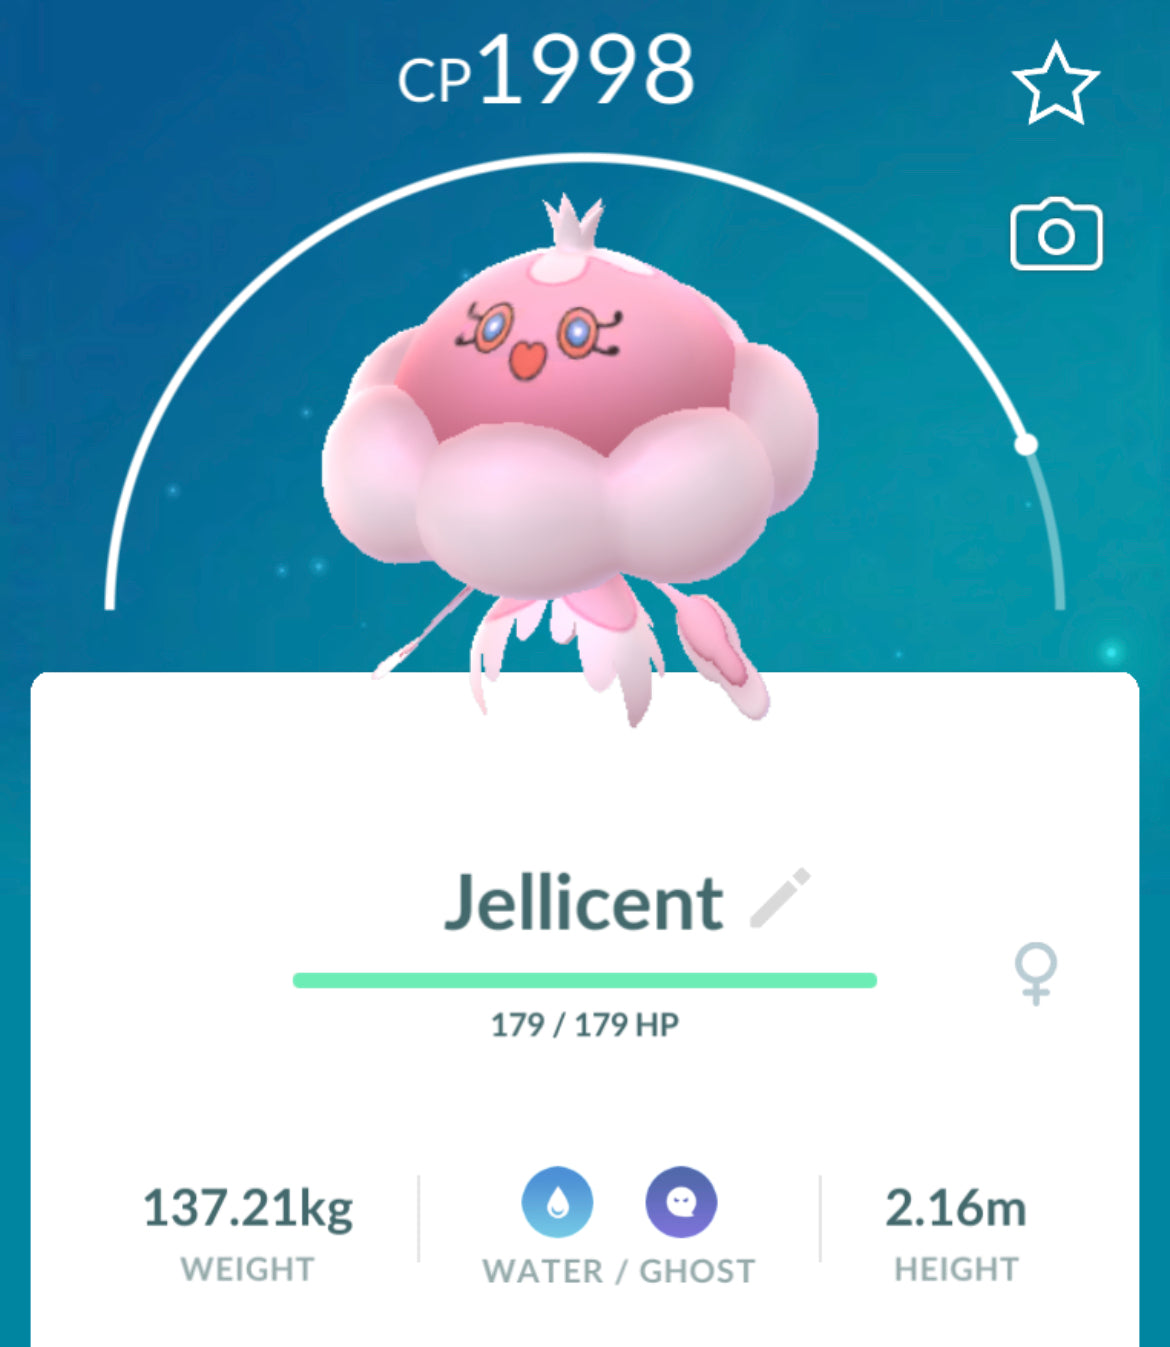 Jellicent